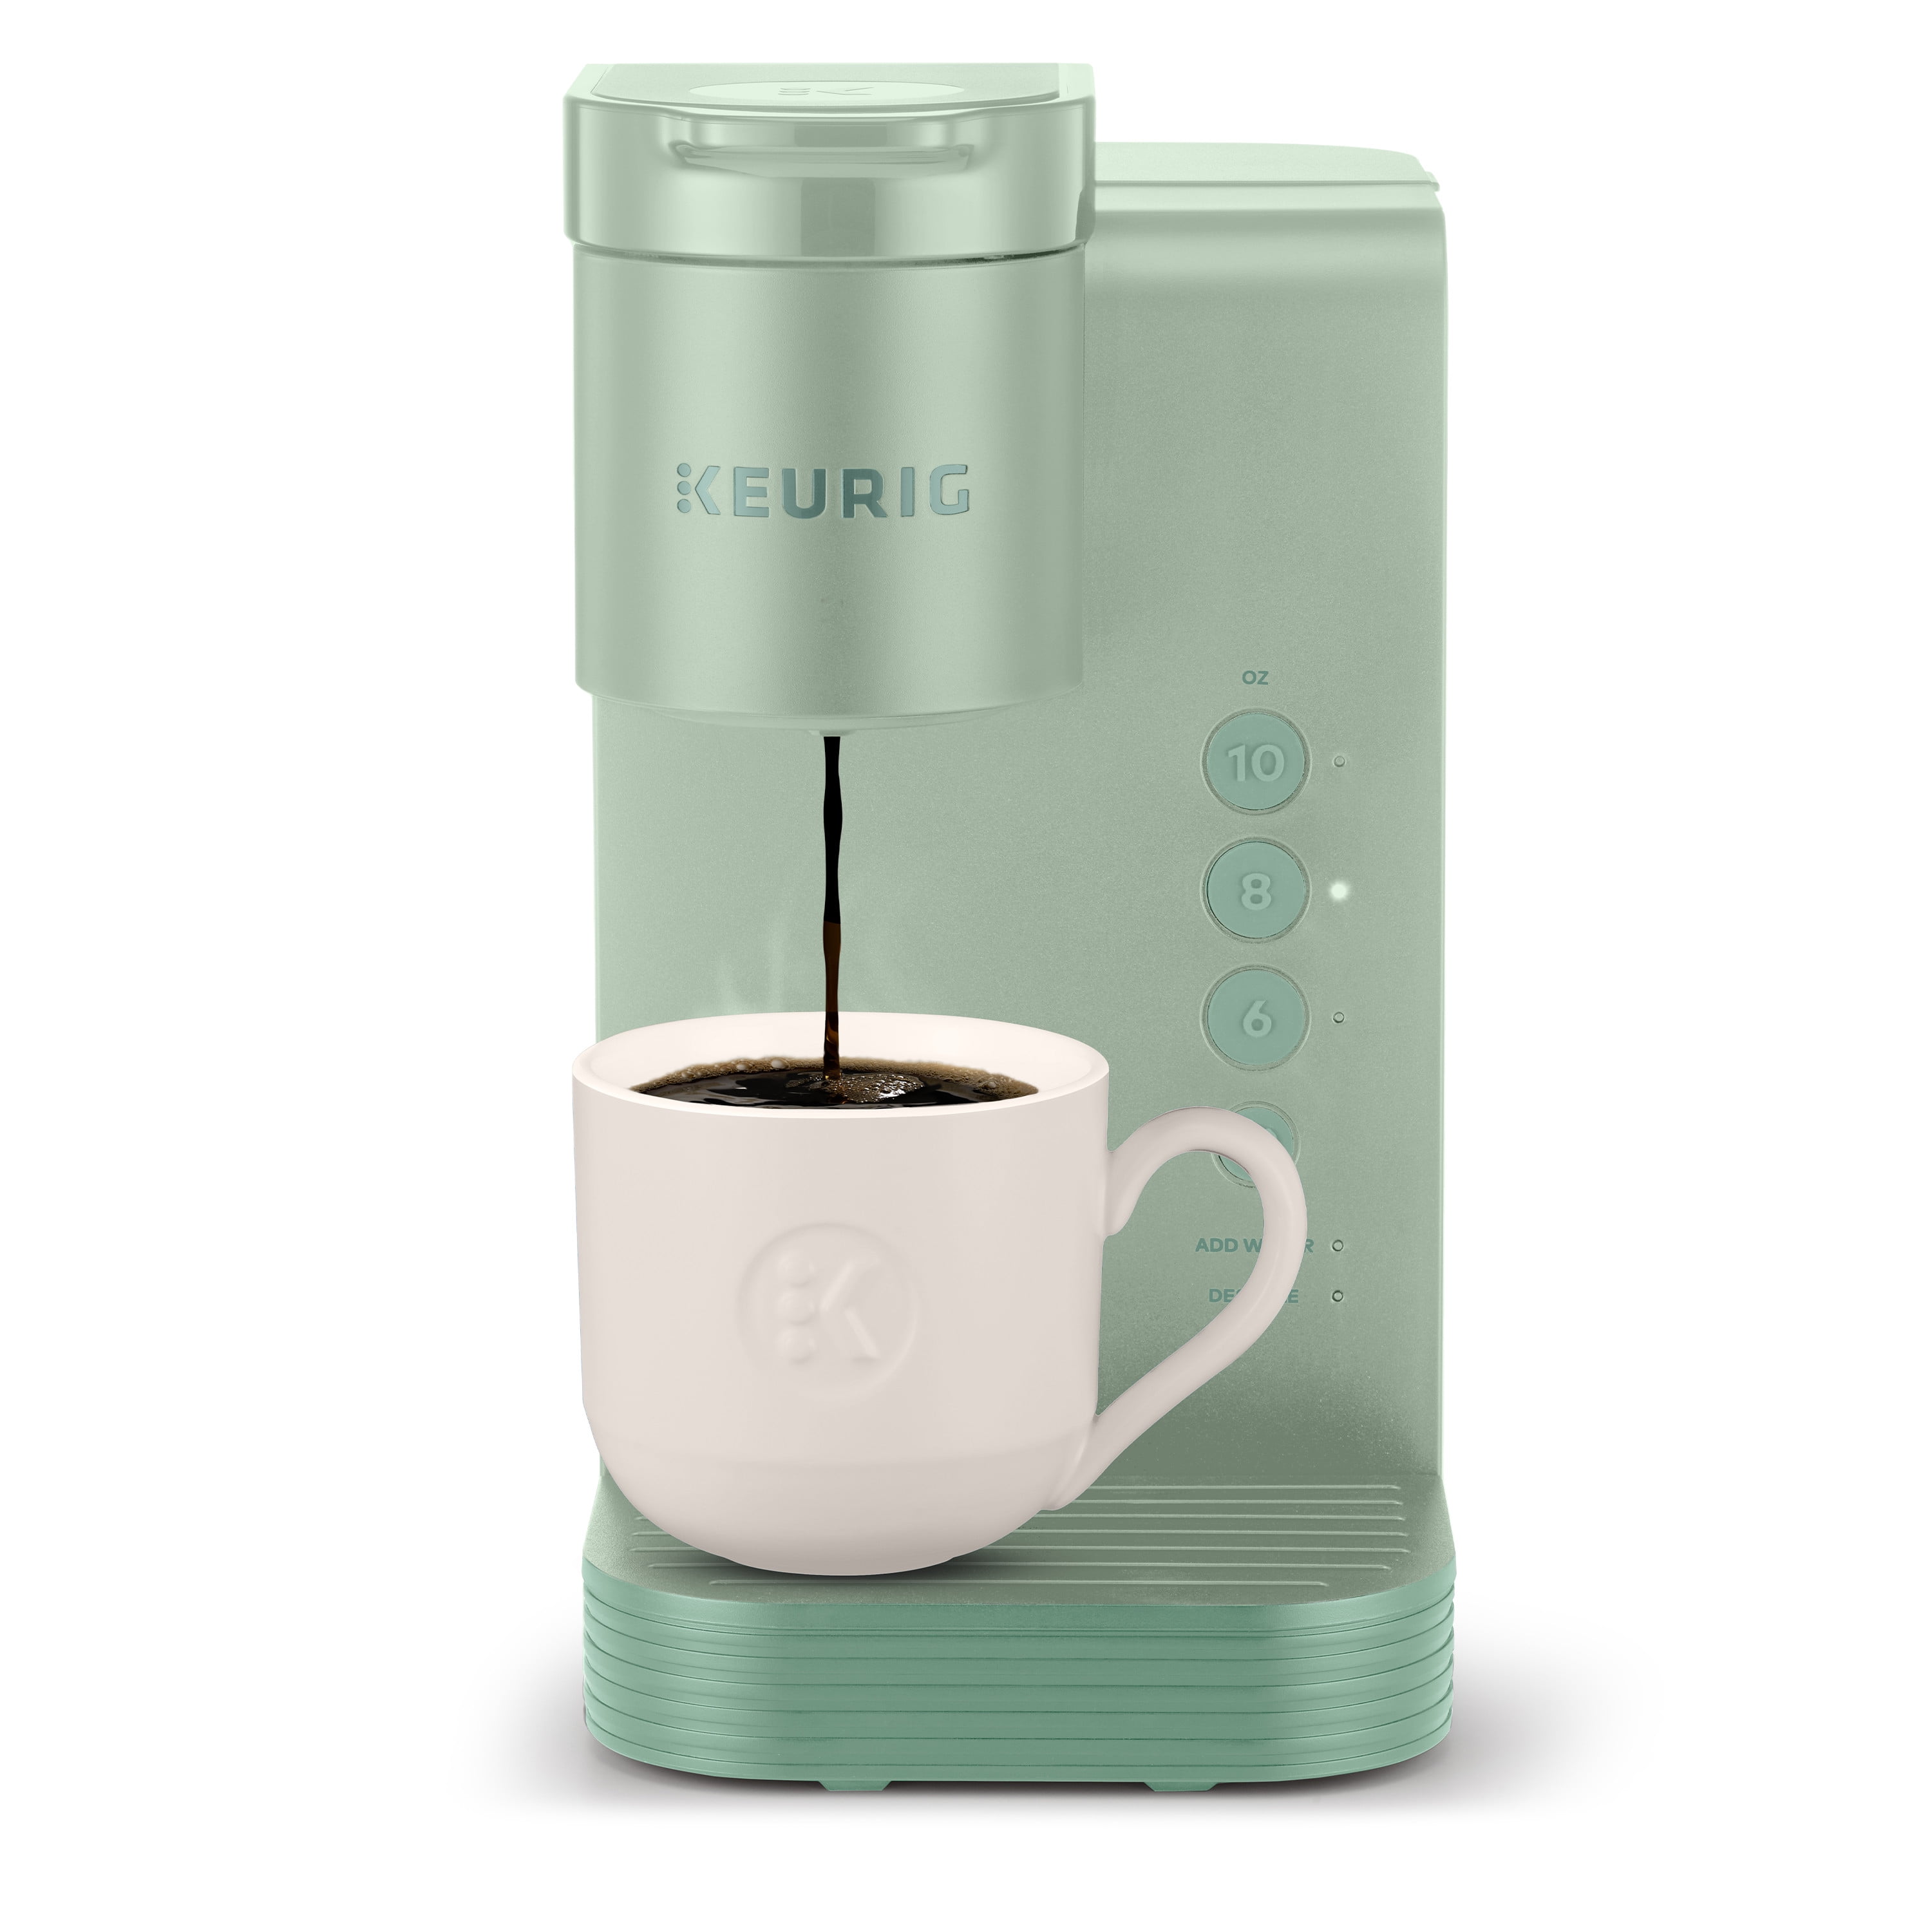 Black Friday 2022: Save up to $50 on Keurig coffee machines